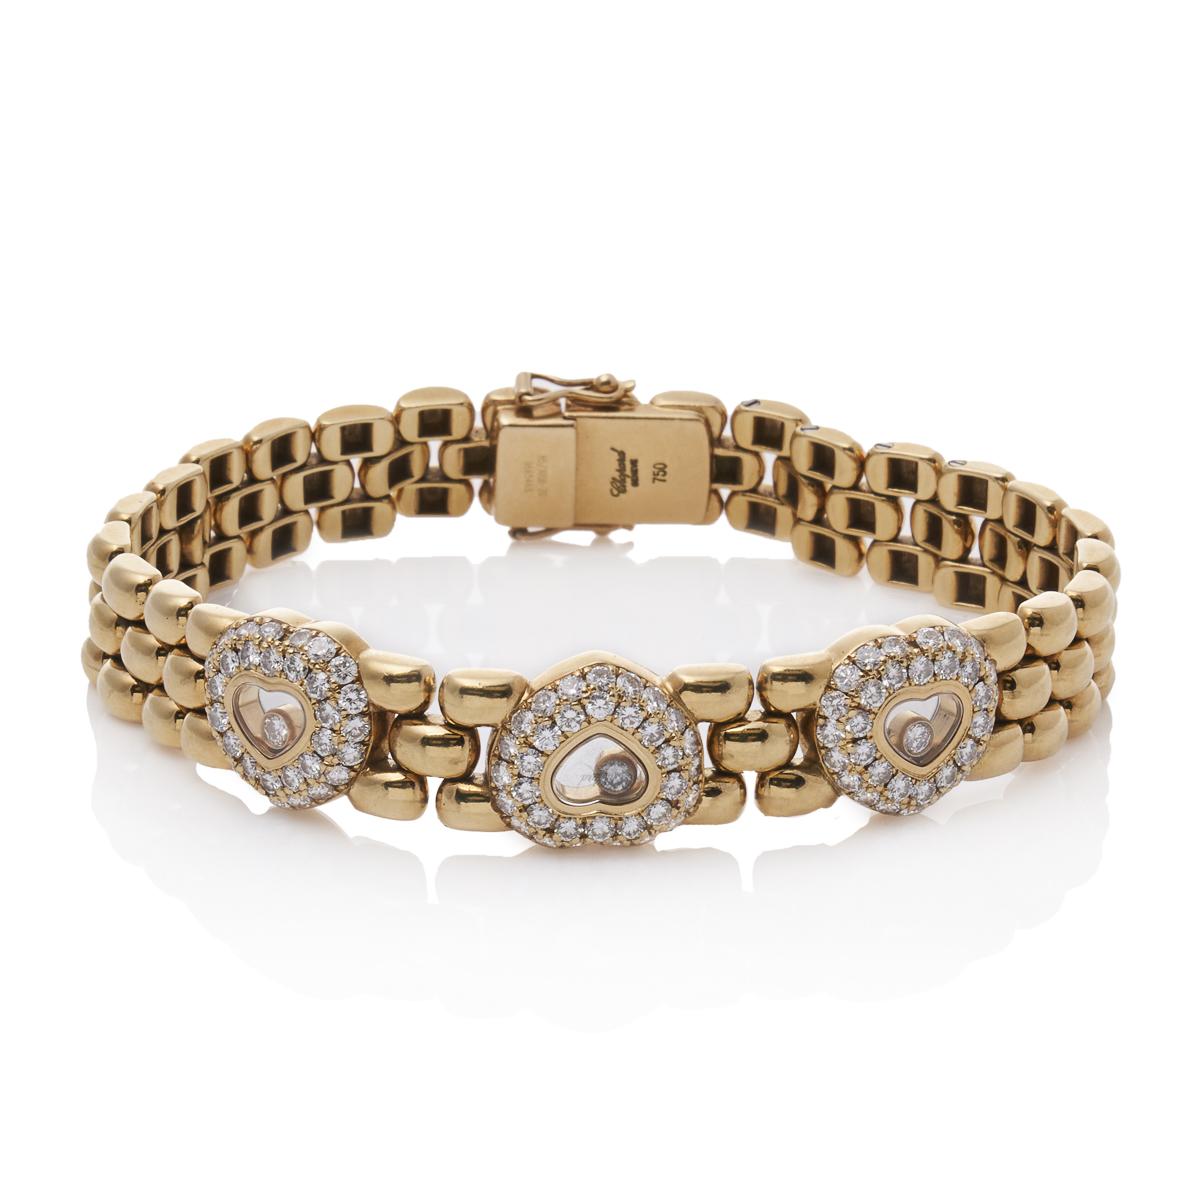 Chopard Happy Curves Square White Gold and Diamond Charm Bracelet 859224  New | eBay